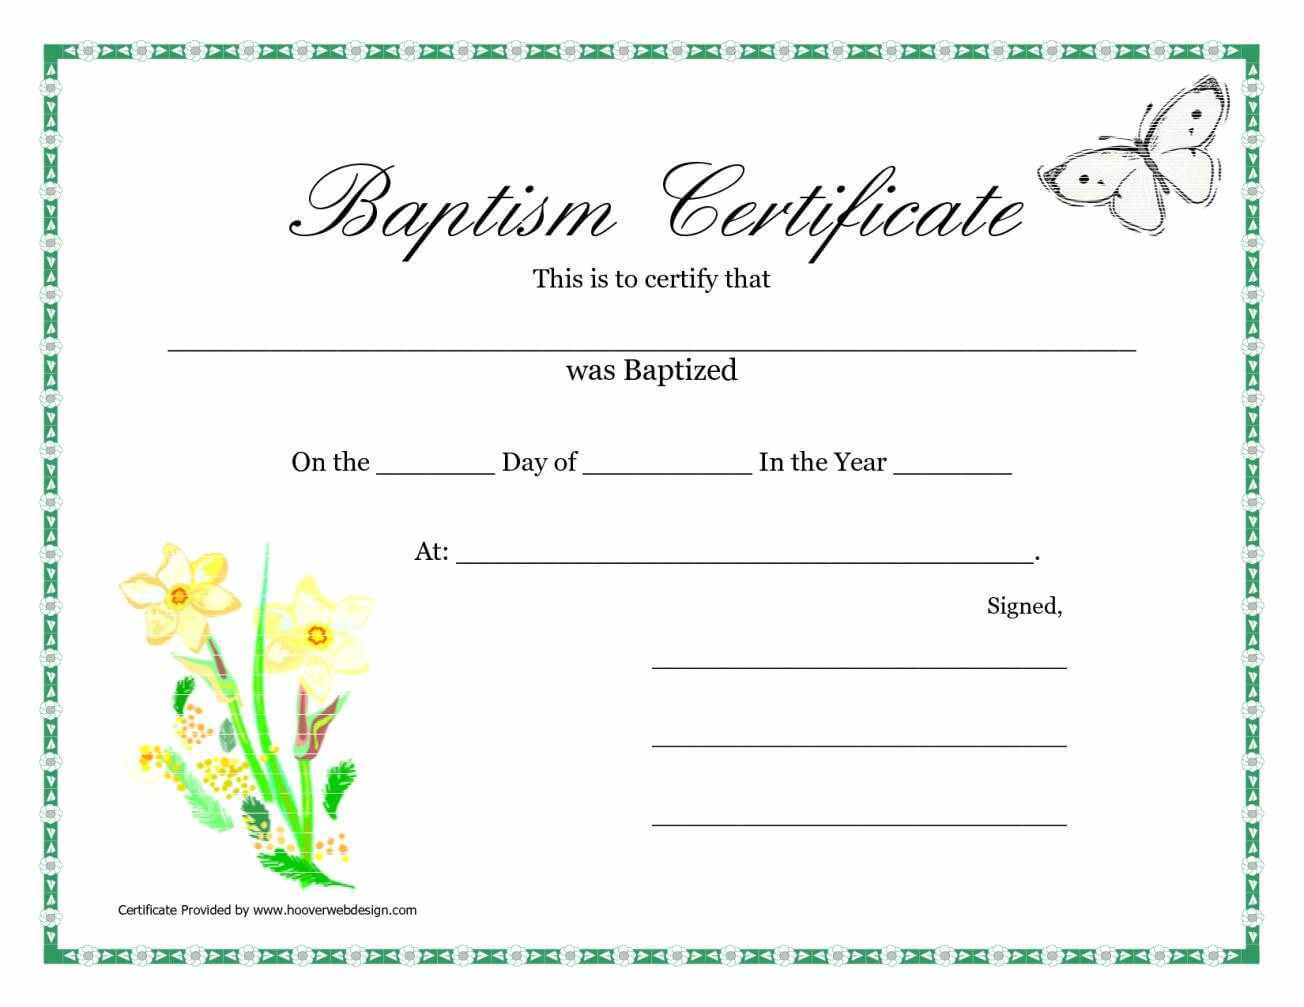 015 Template Ideas Certificate Of Baptism Unique Broadman Regarding Roman Catholic Baptism Certificate Template